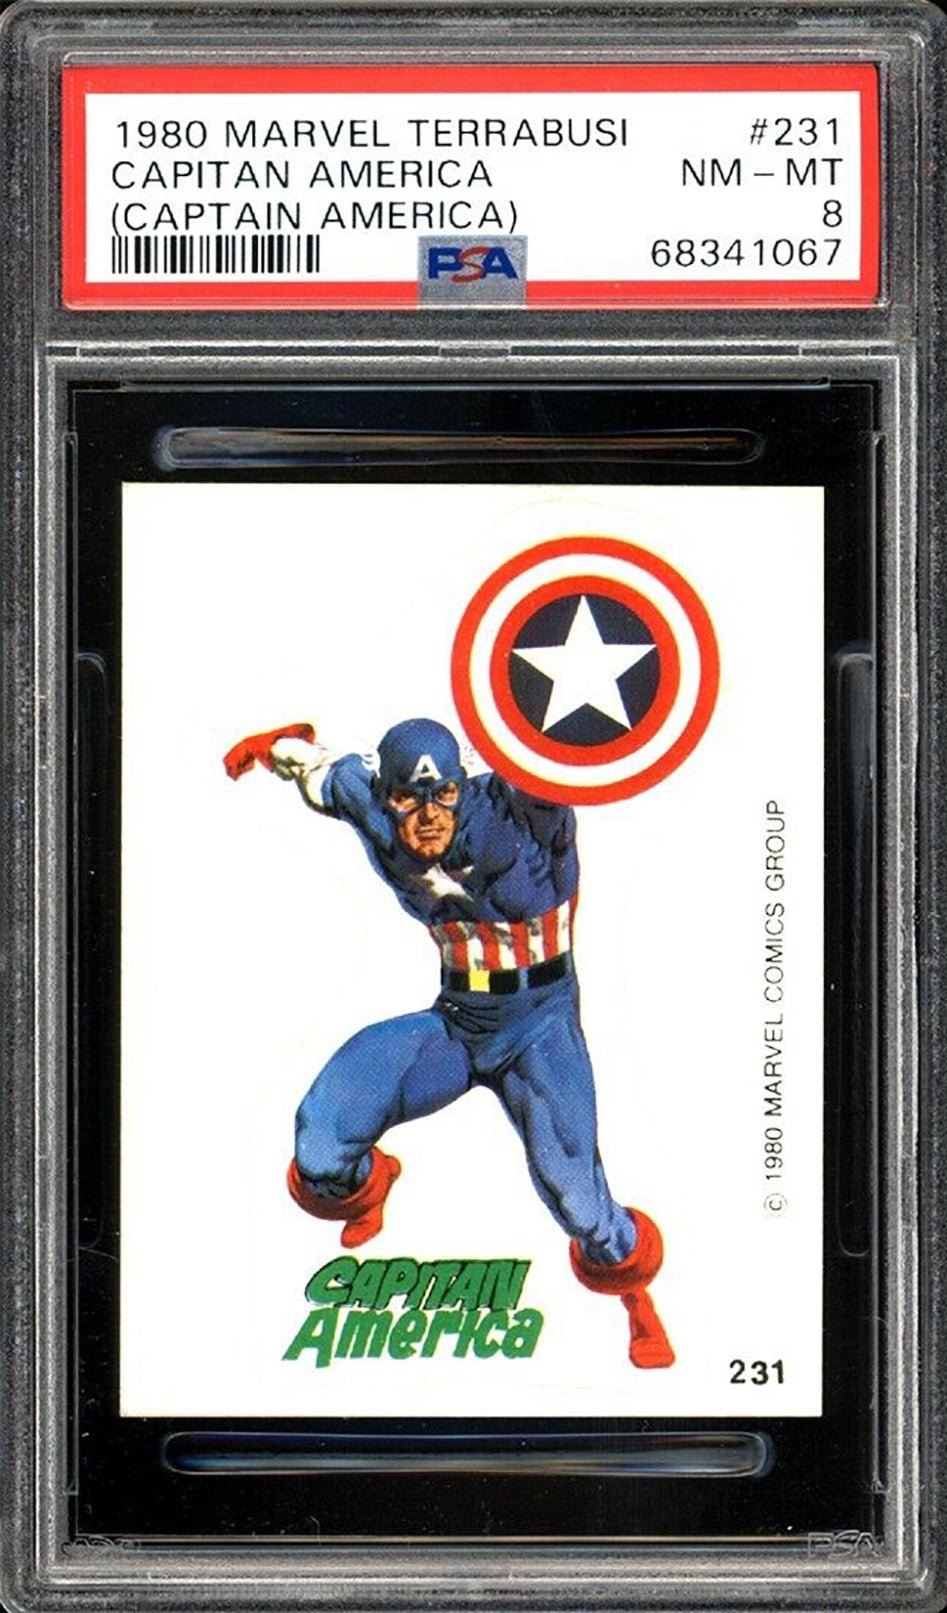 CAPTAIN AMERICA PSA 8 1980 Marvel Terrabusi Sticker #231 Capitan America C2 Marvel Graded Cards Sticker - Hobby Gems